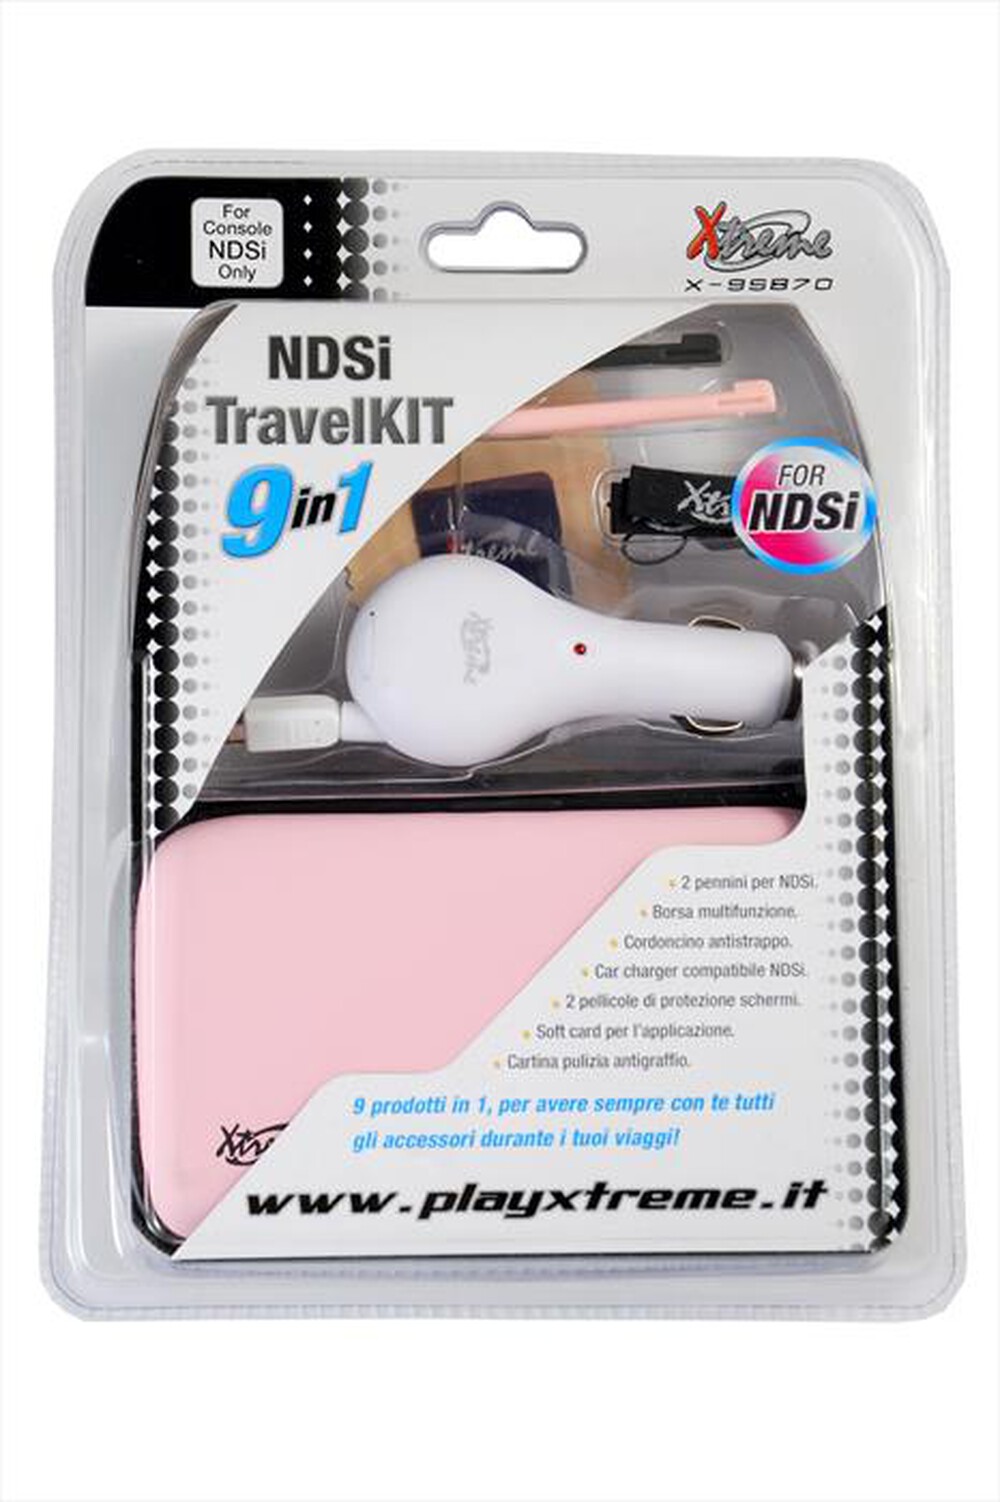 "XTREME - 95870 - Travel Kit 9 in 1"